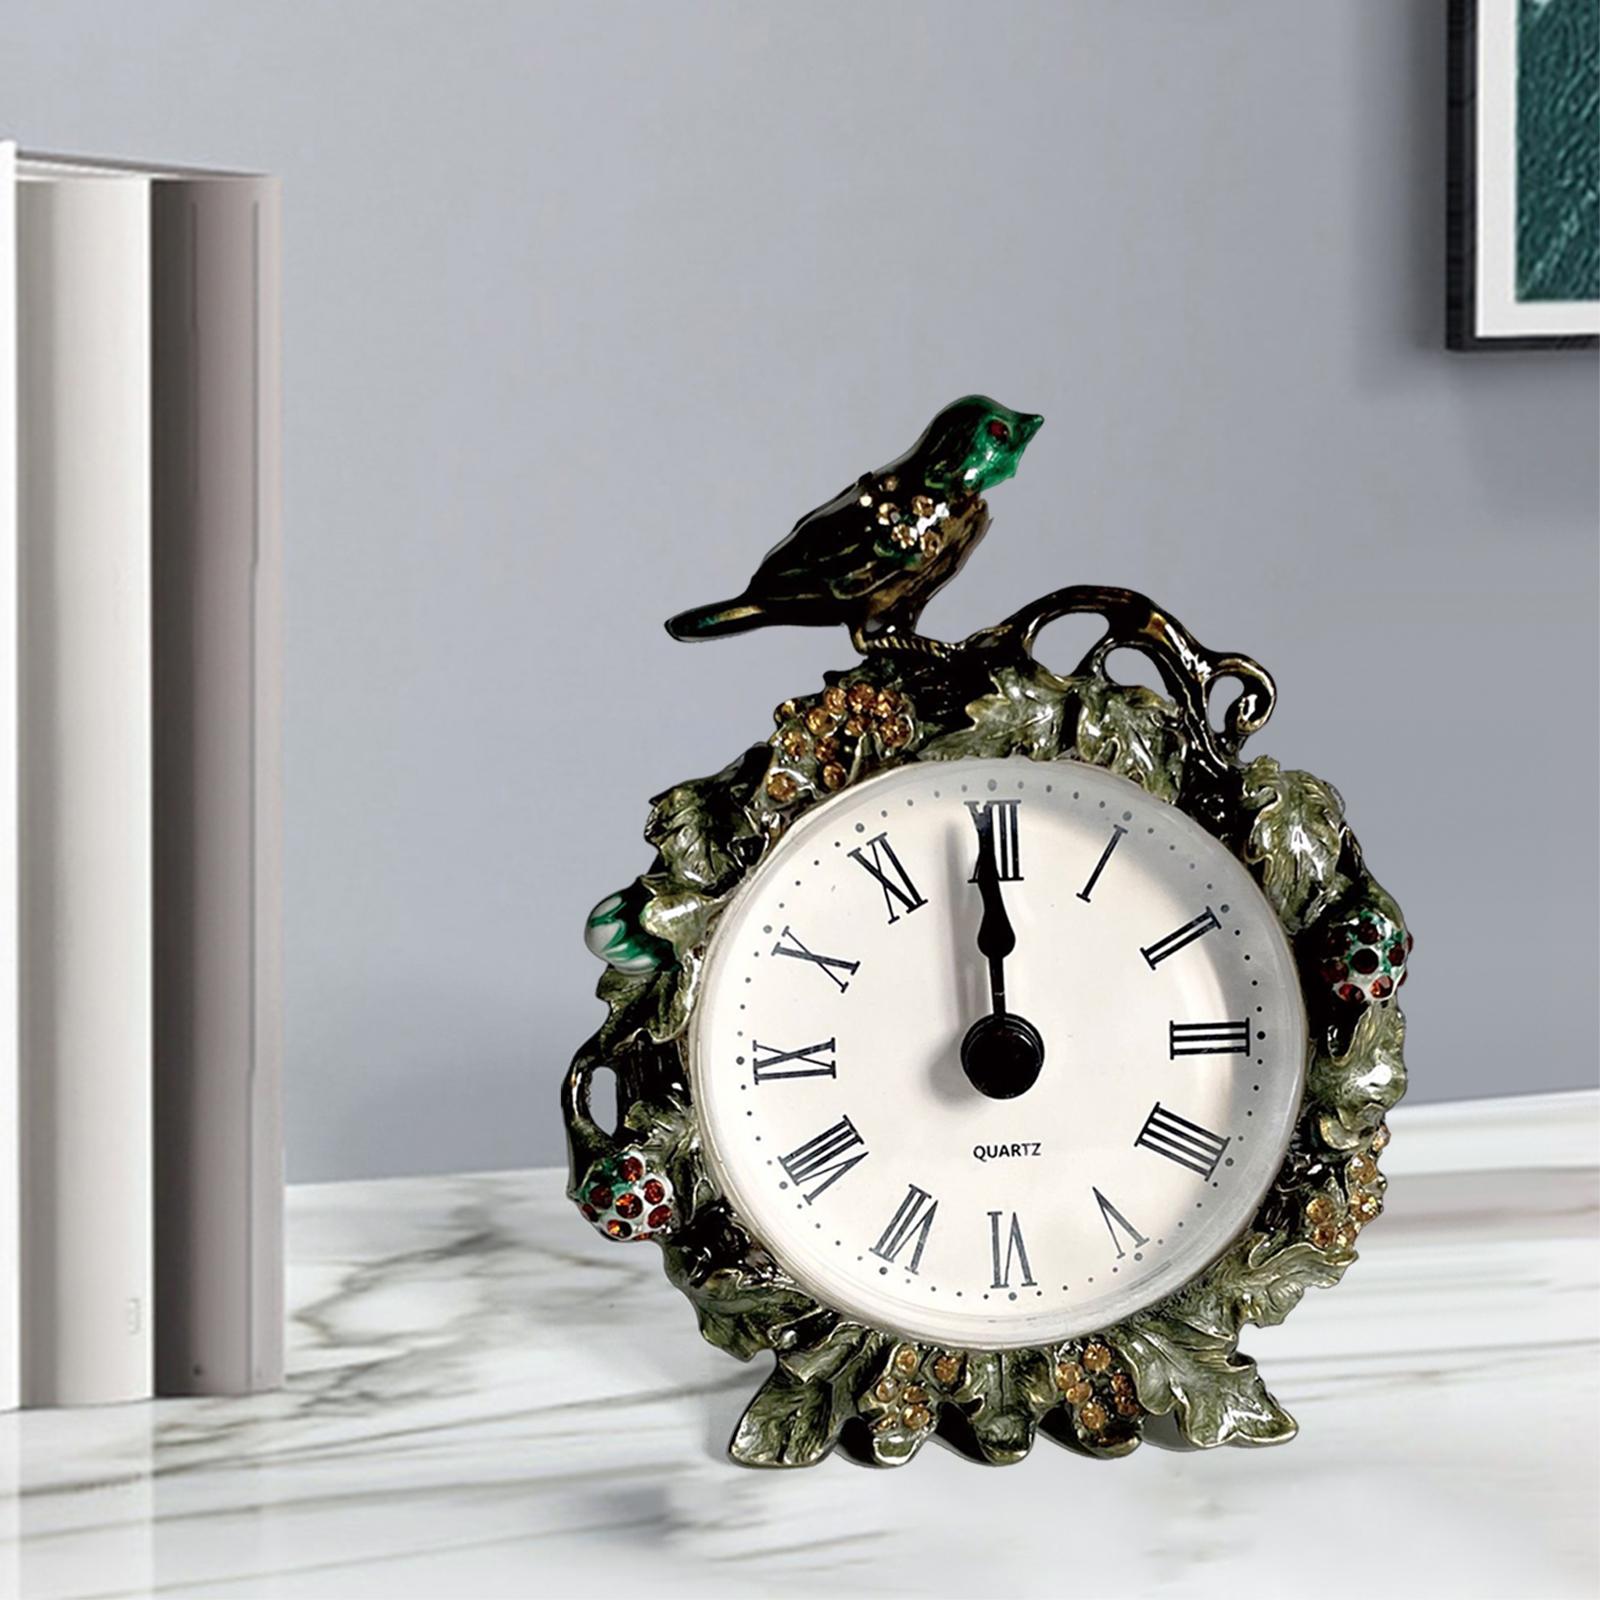 Vintage Style Table Clock Alarm Clock Quartz Movement for Office Bar Bedroom